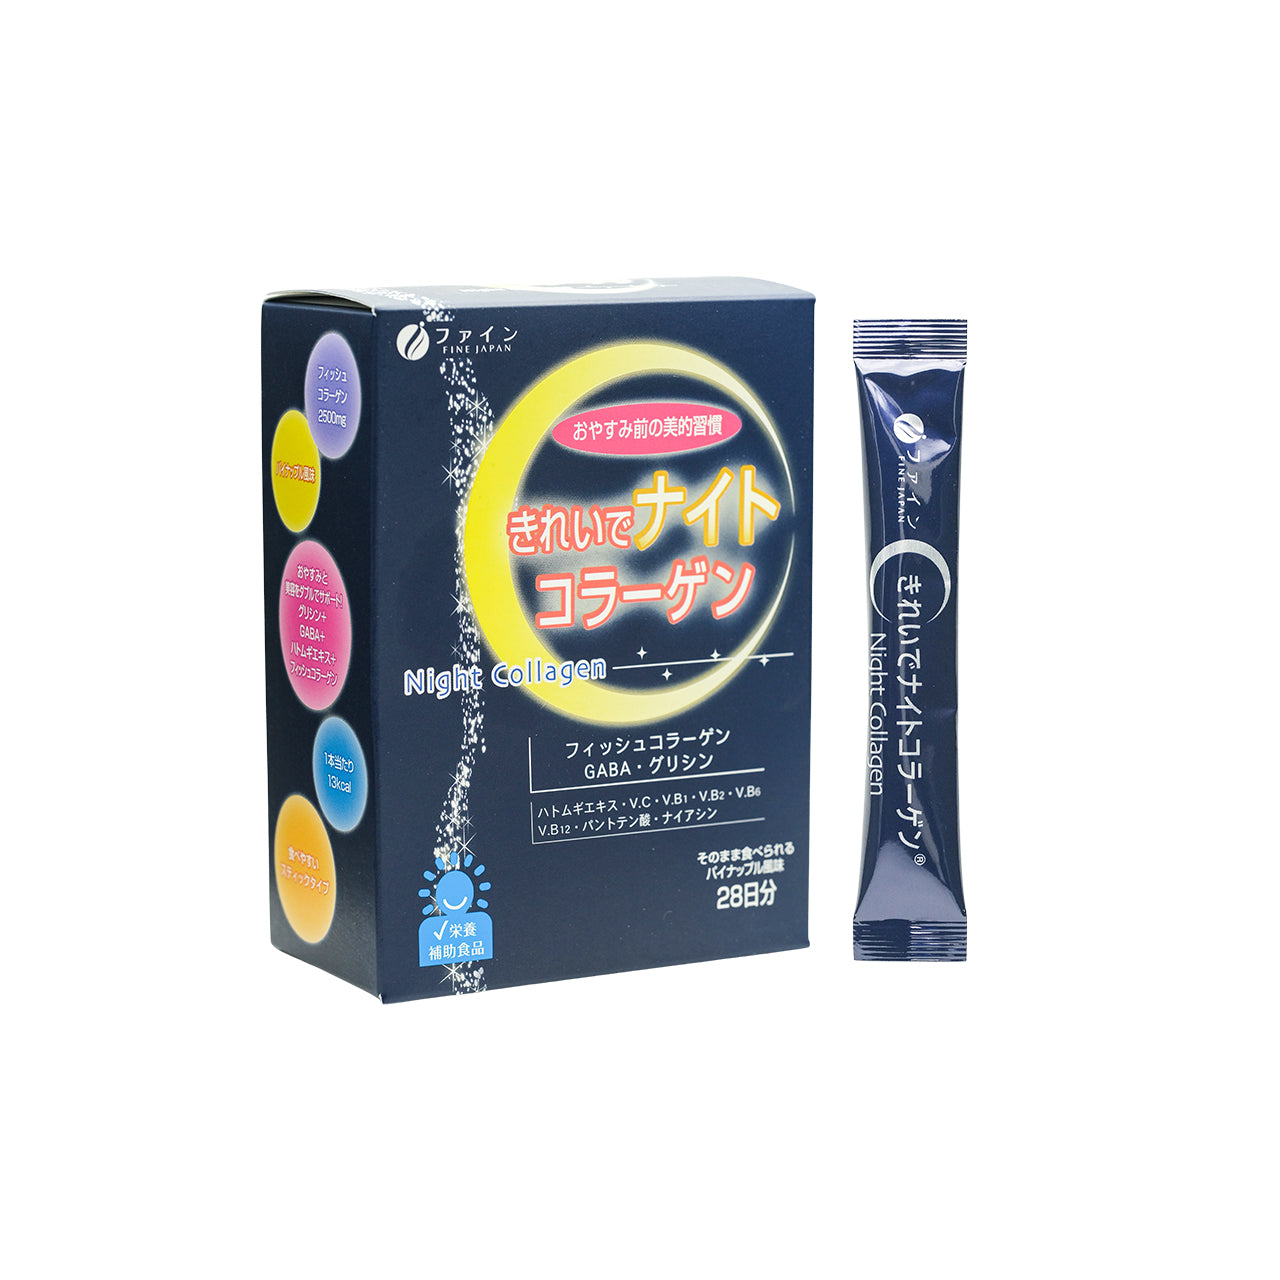 Fine Japan Night Collagen Upgrade 3.6g x 28pcs | Sasa Global eShop